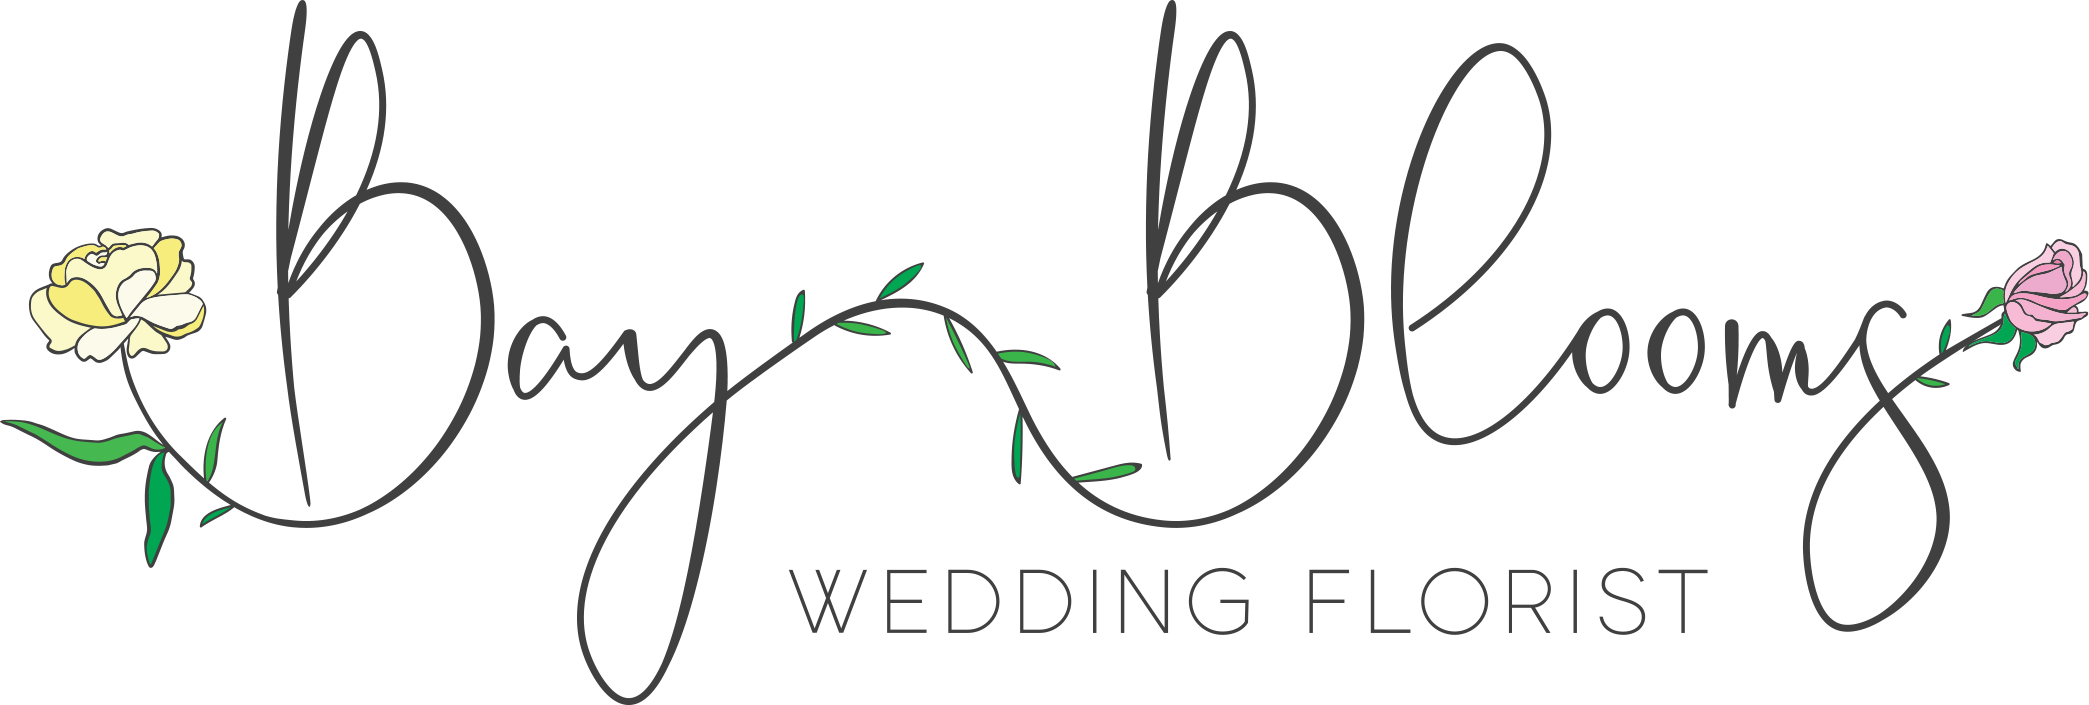 Bay Blooms Wedding Florist